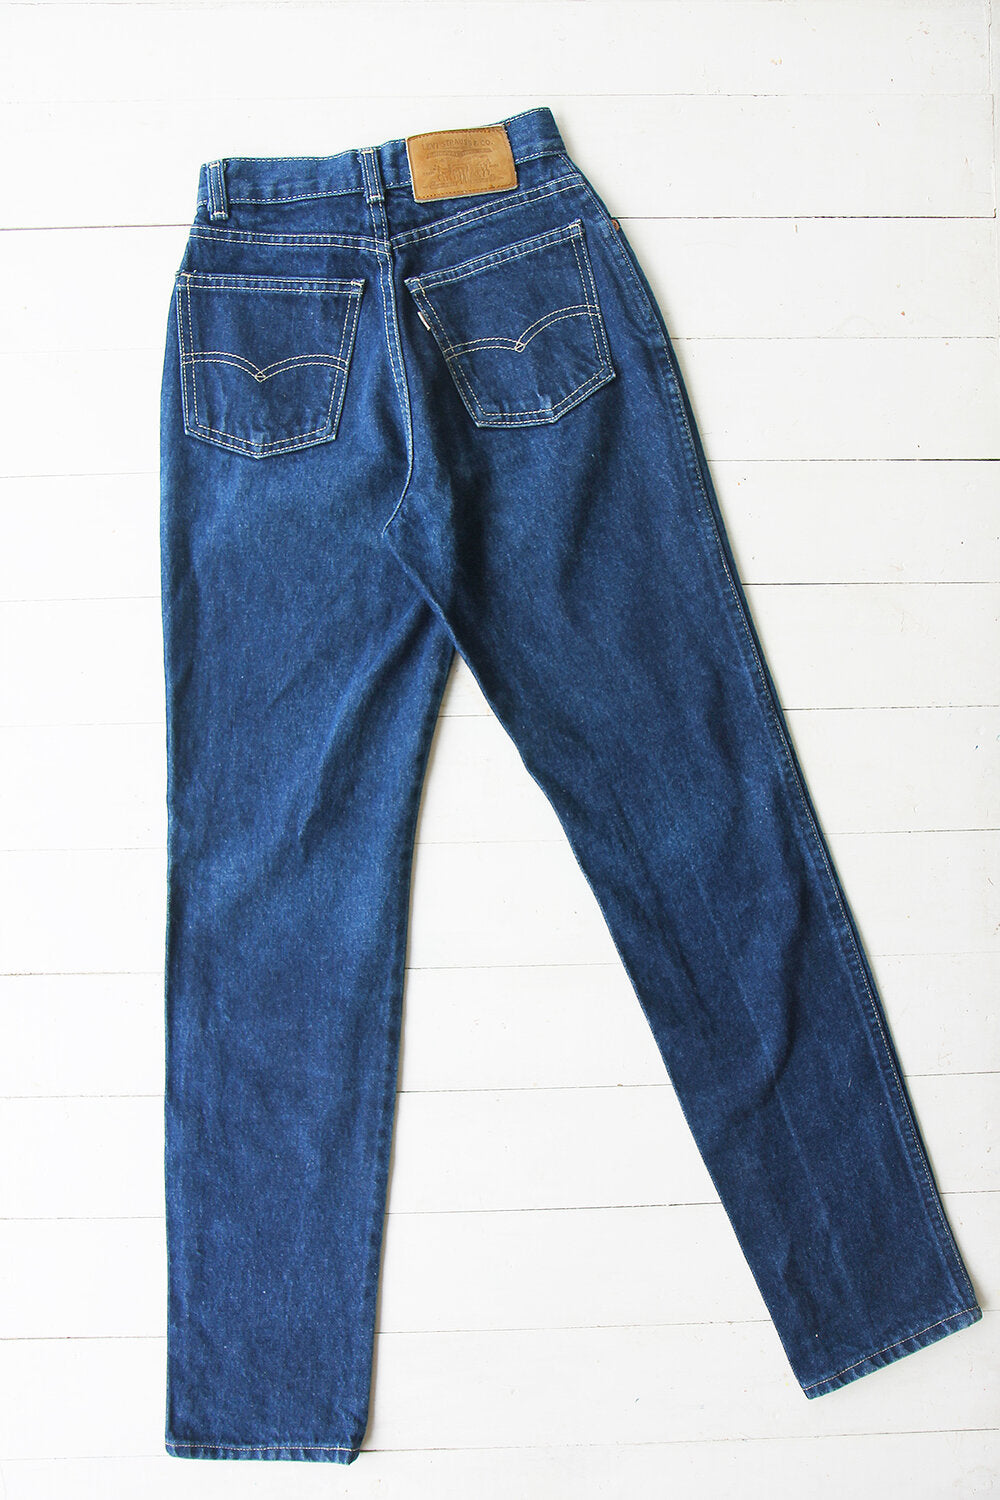 Original Levi's White Tab Dark Blue High Rise 24"(61cm) Mom Jeans